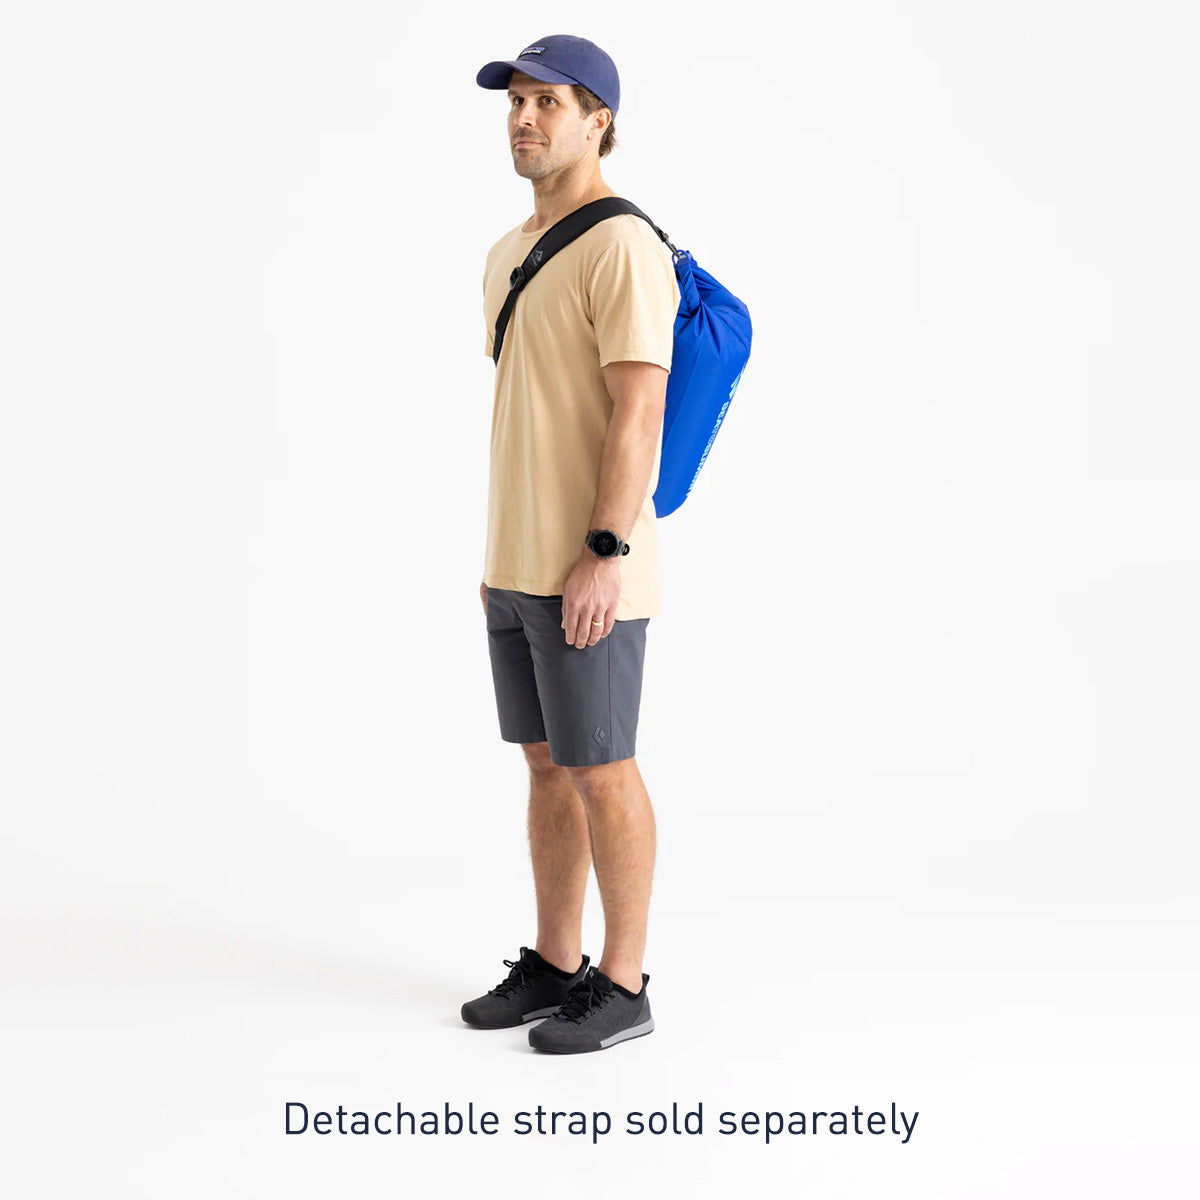 Sea to Summit Lightweight Dry Sack, All-Purpose Dry Bag